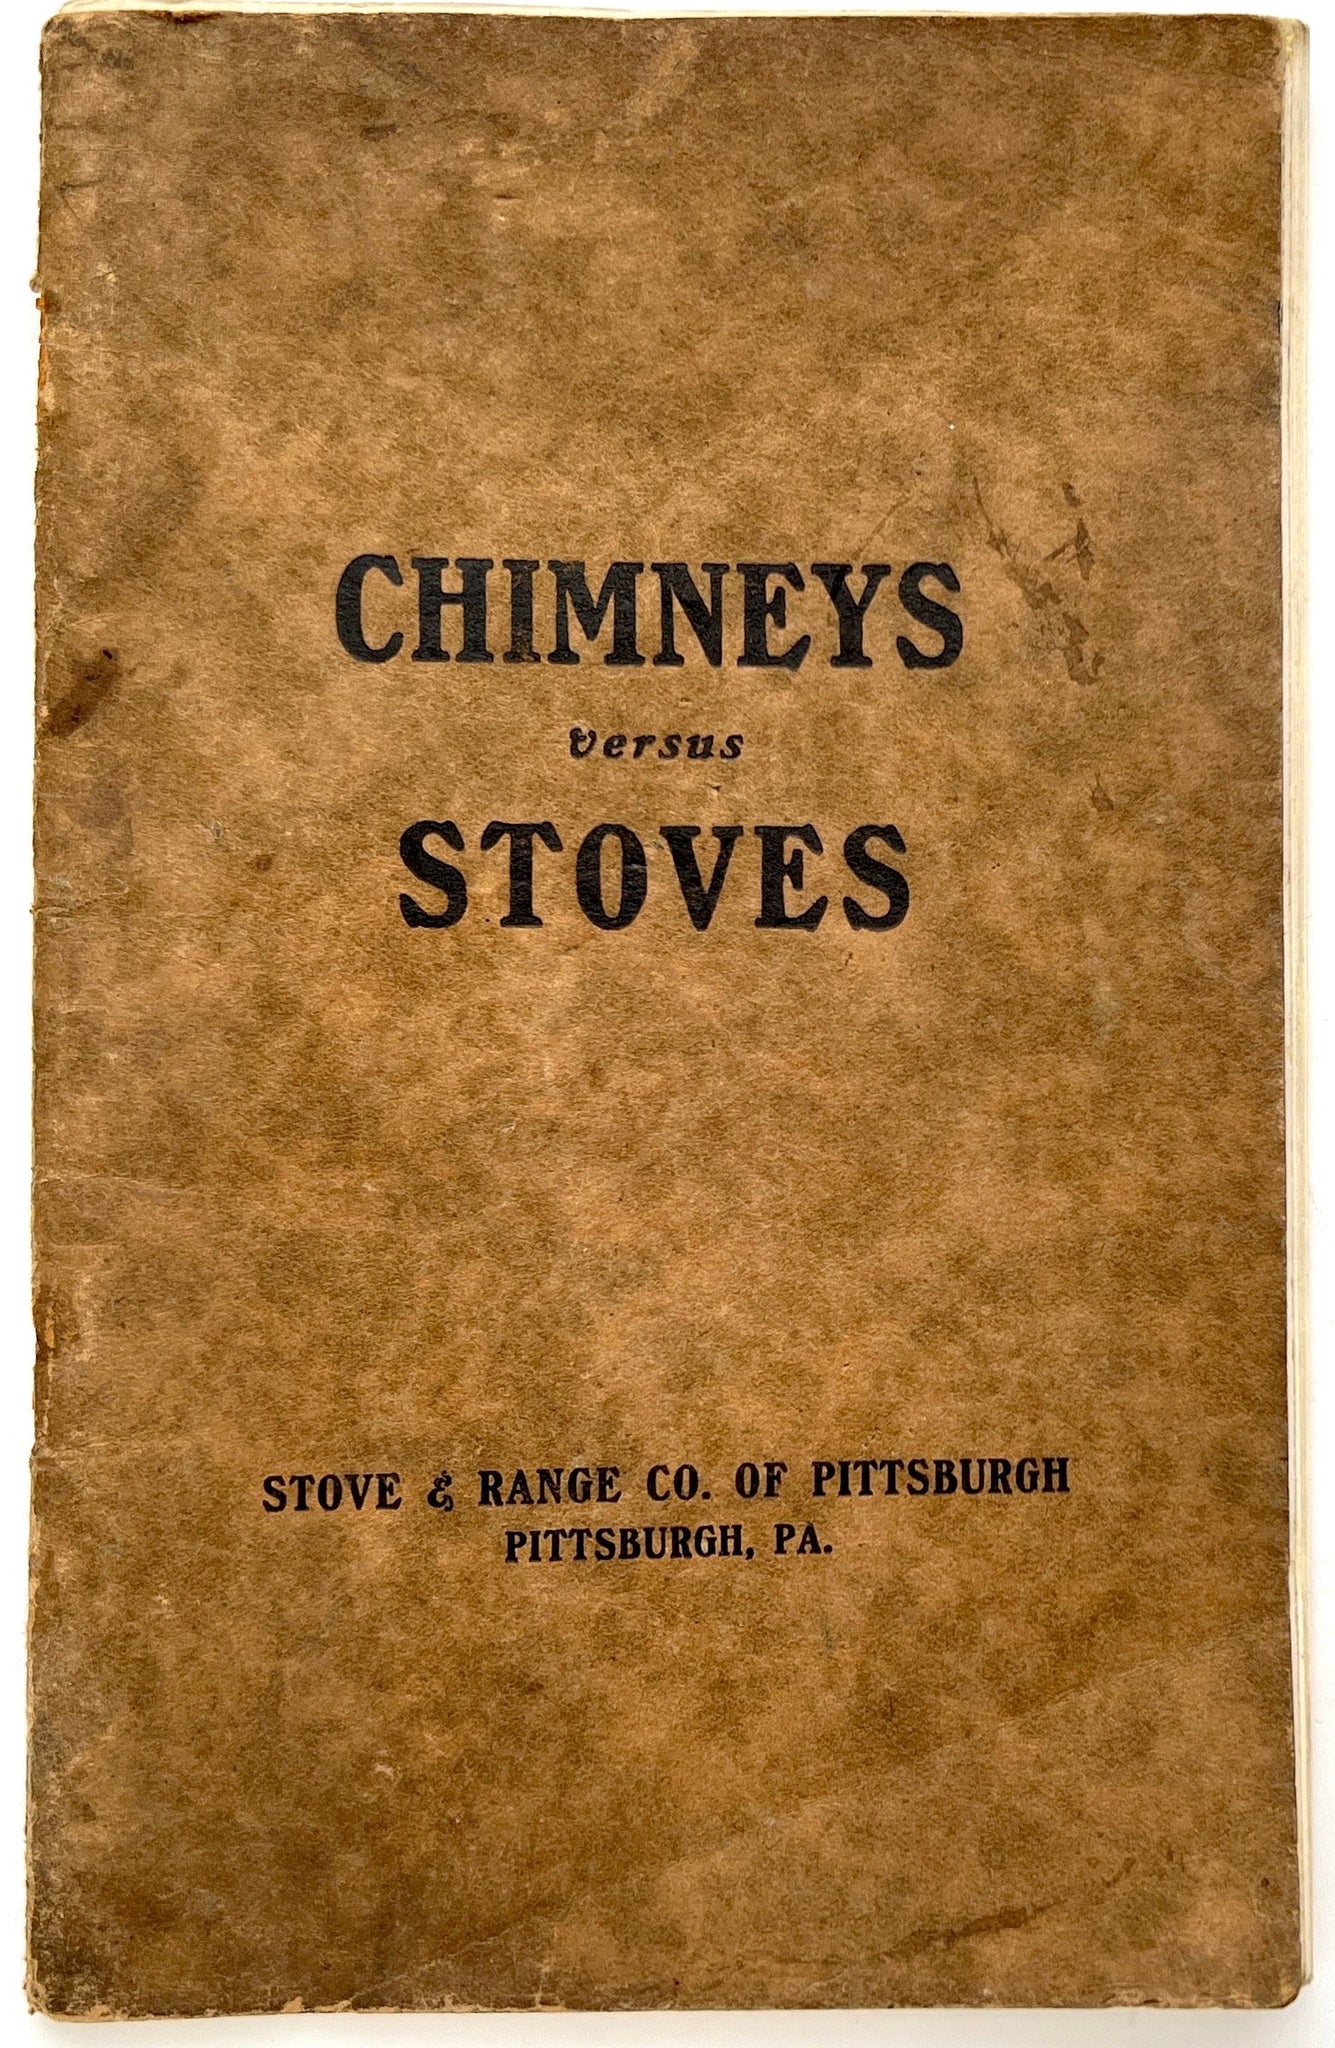 Chimneys Versus Stoves: How to Make Stoves Work at Defective Chimneys